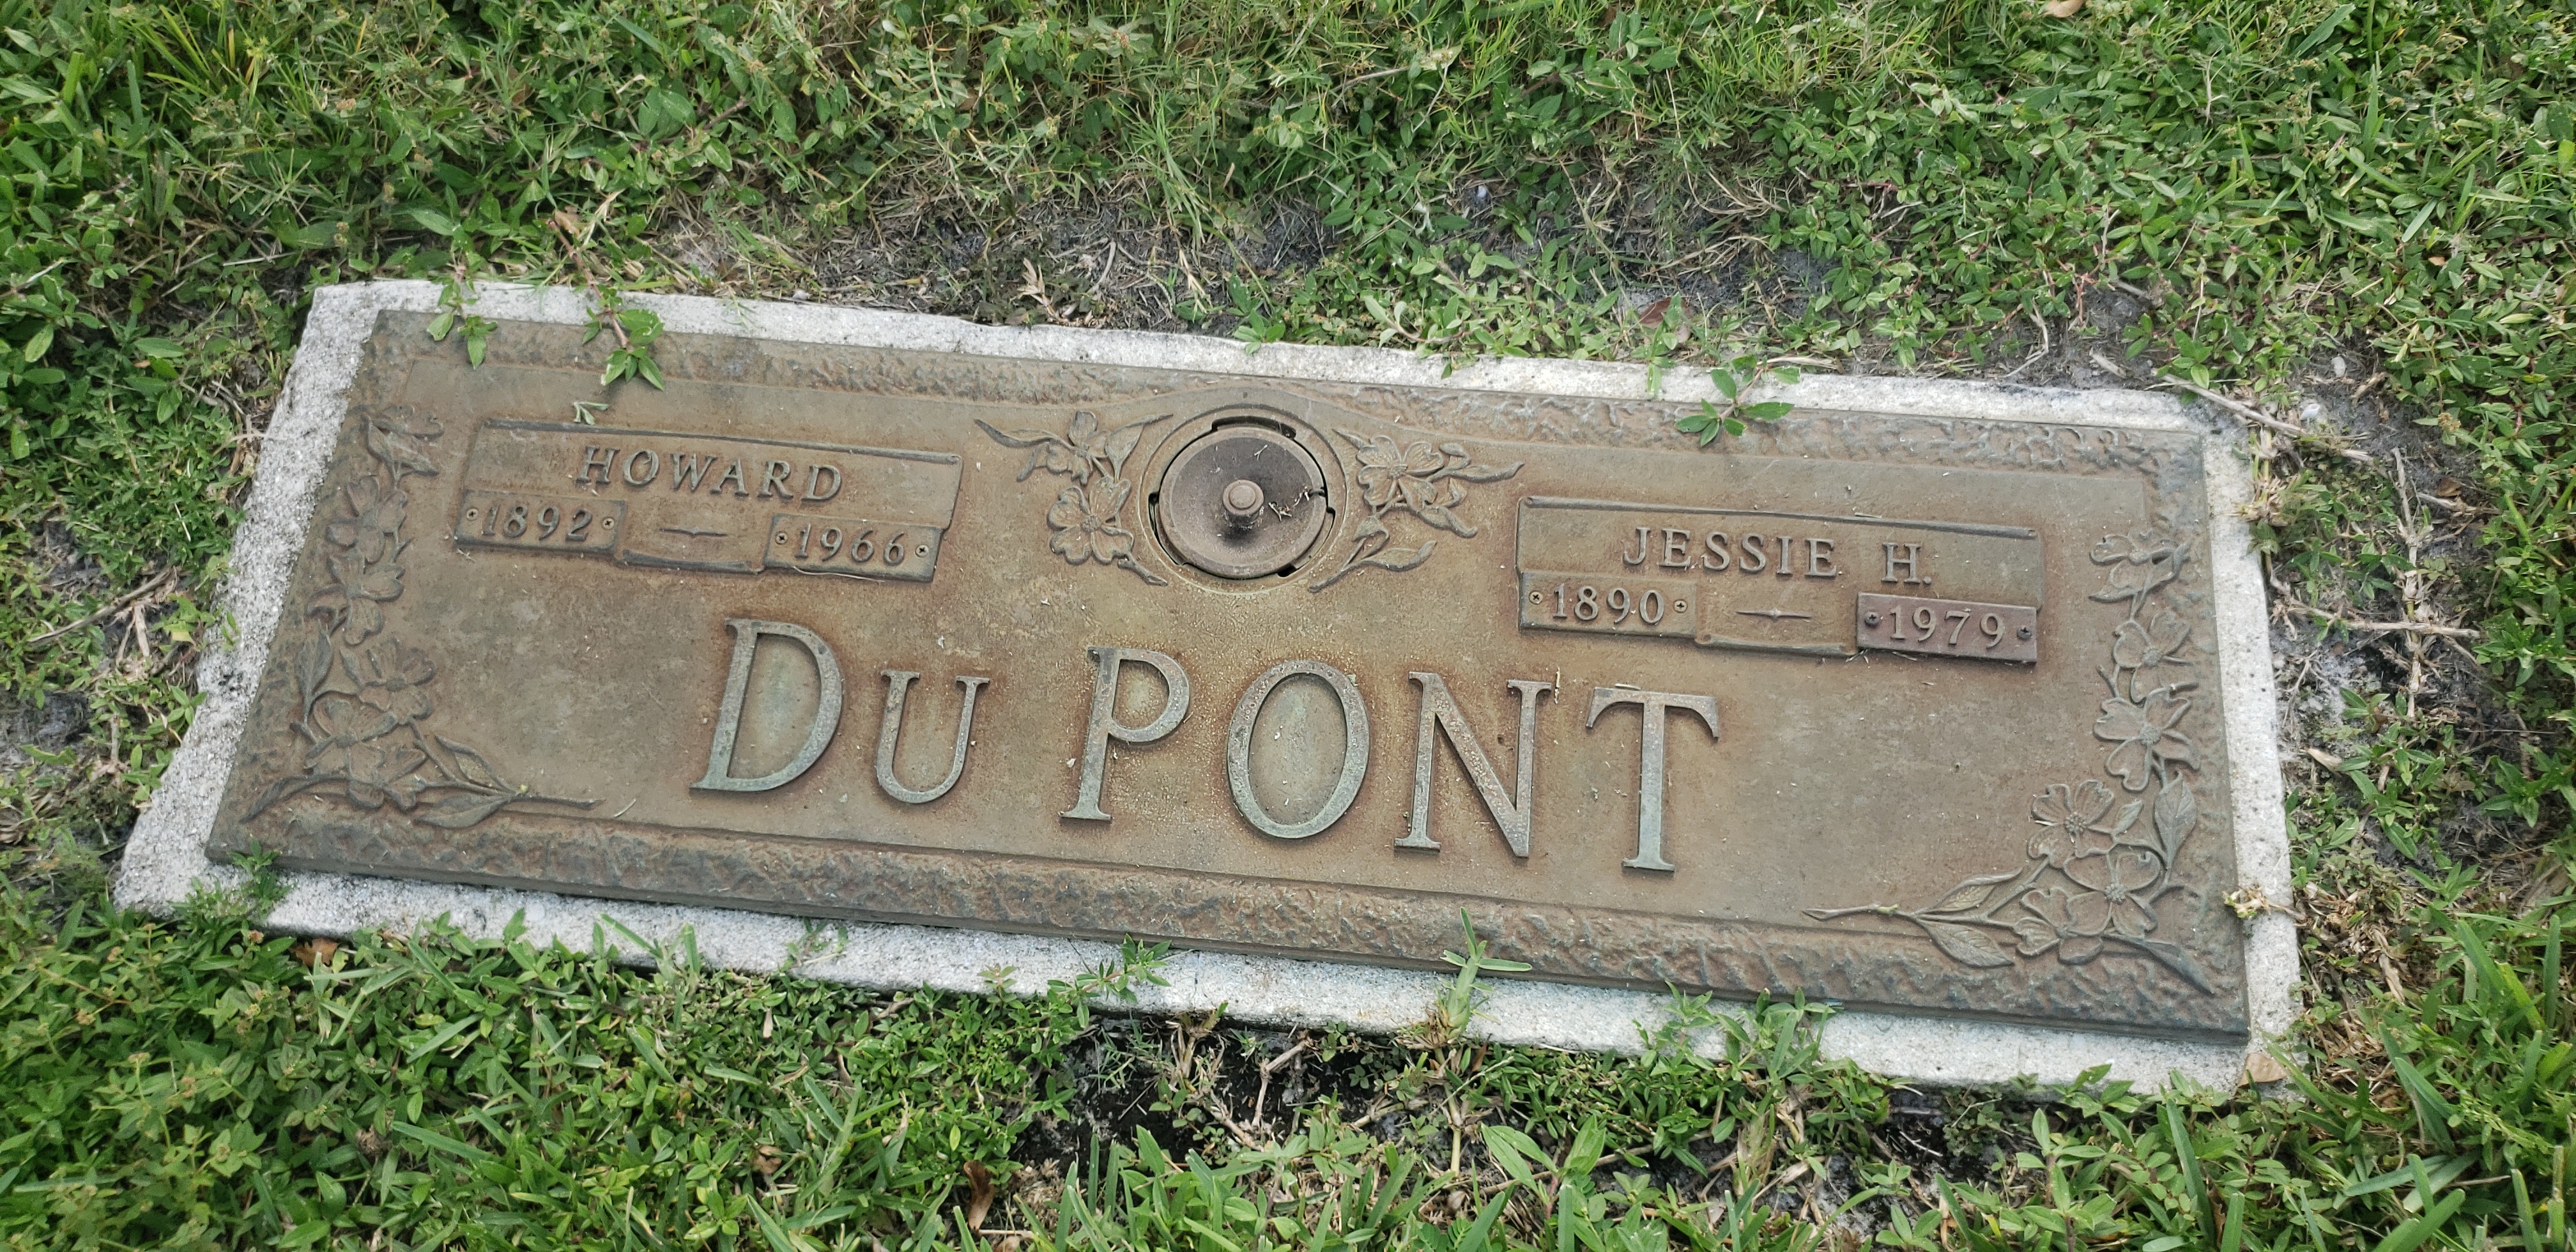 Howard DuPont